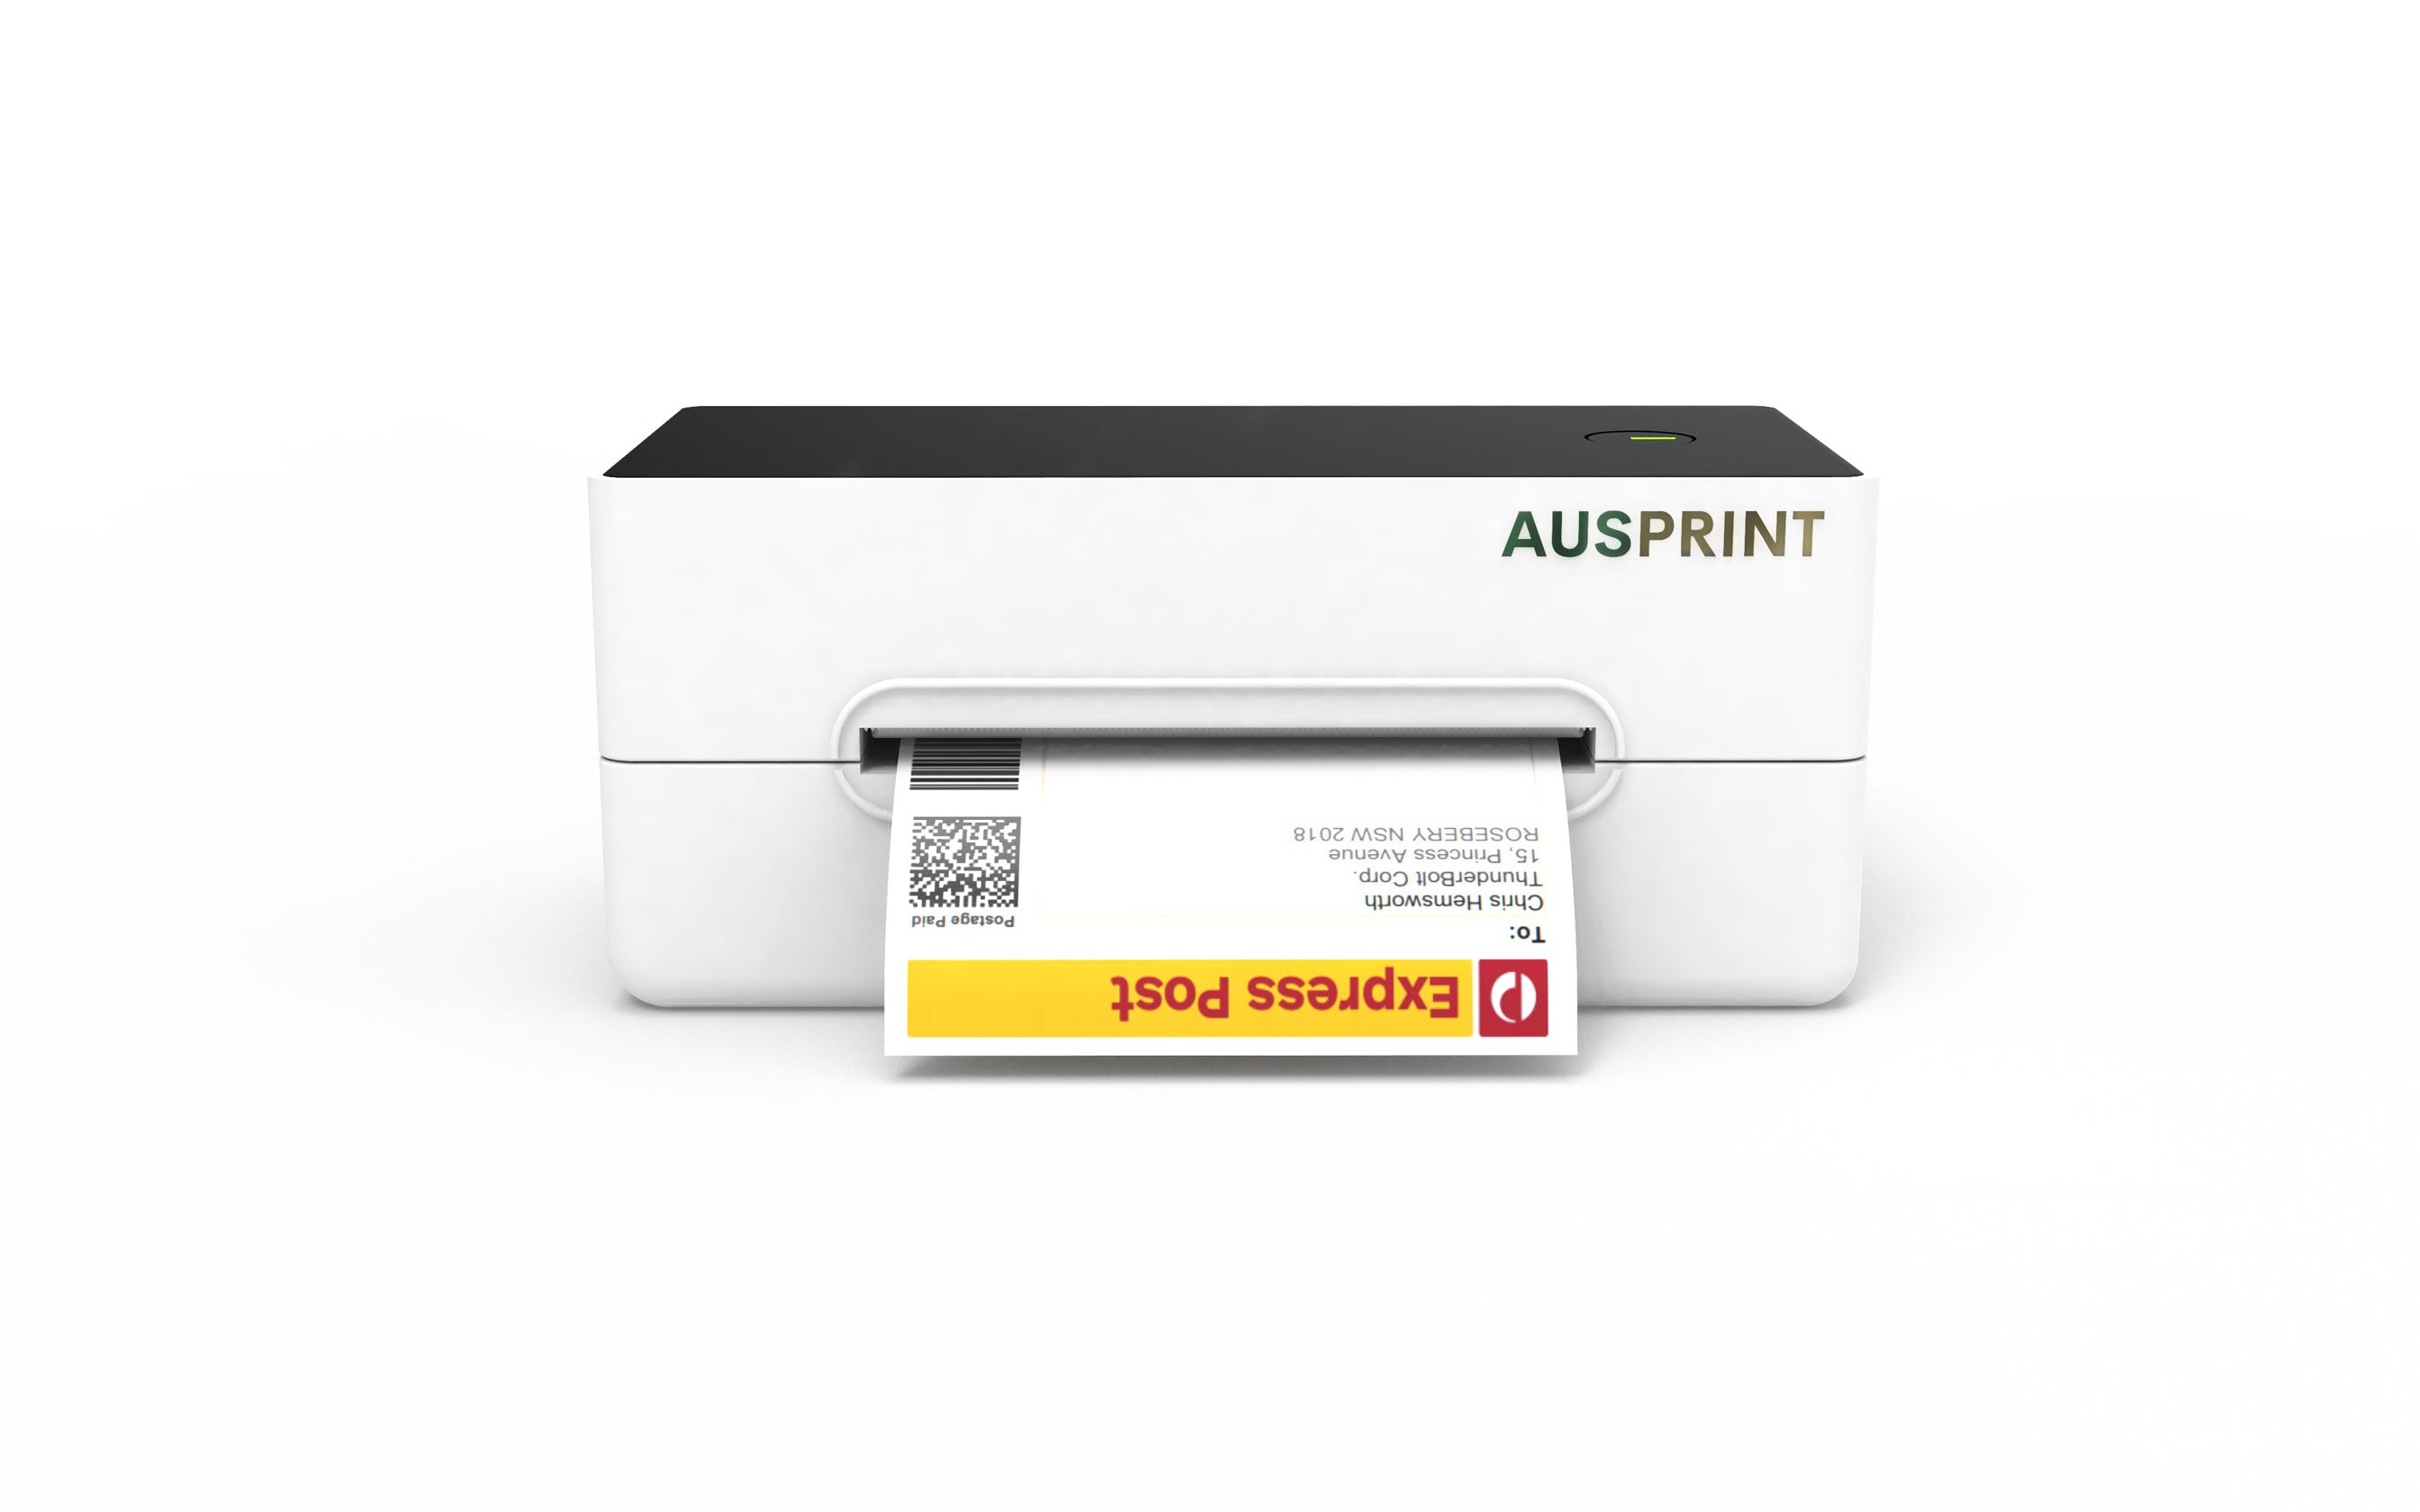 AUSPRINT Thermal Label Printer